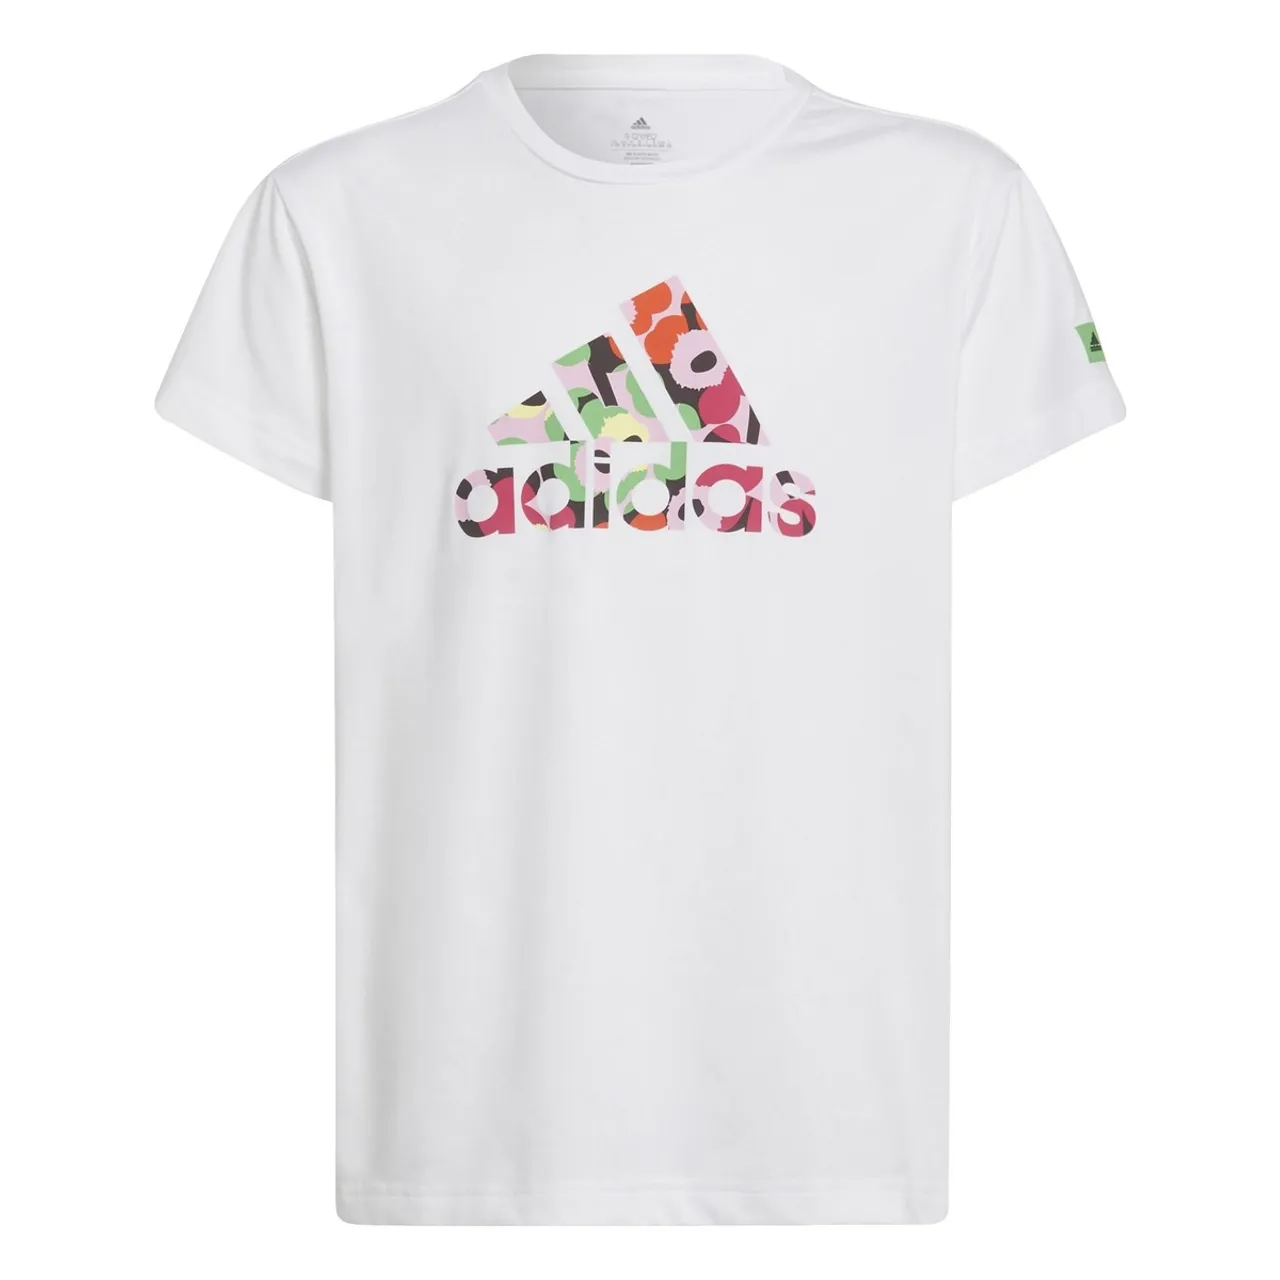 adidas  ELOISHA  girls's Children's T shirt in White